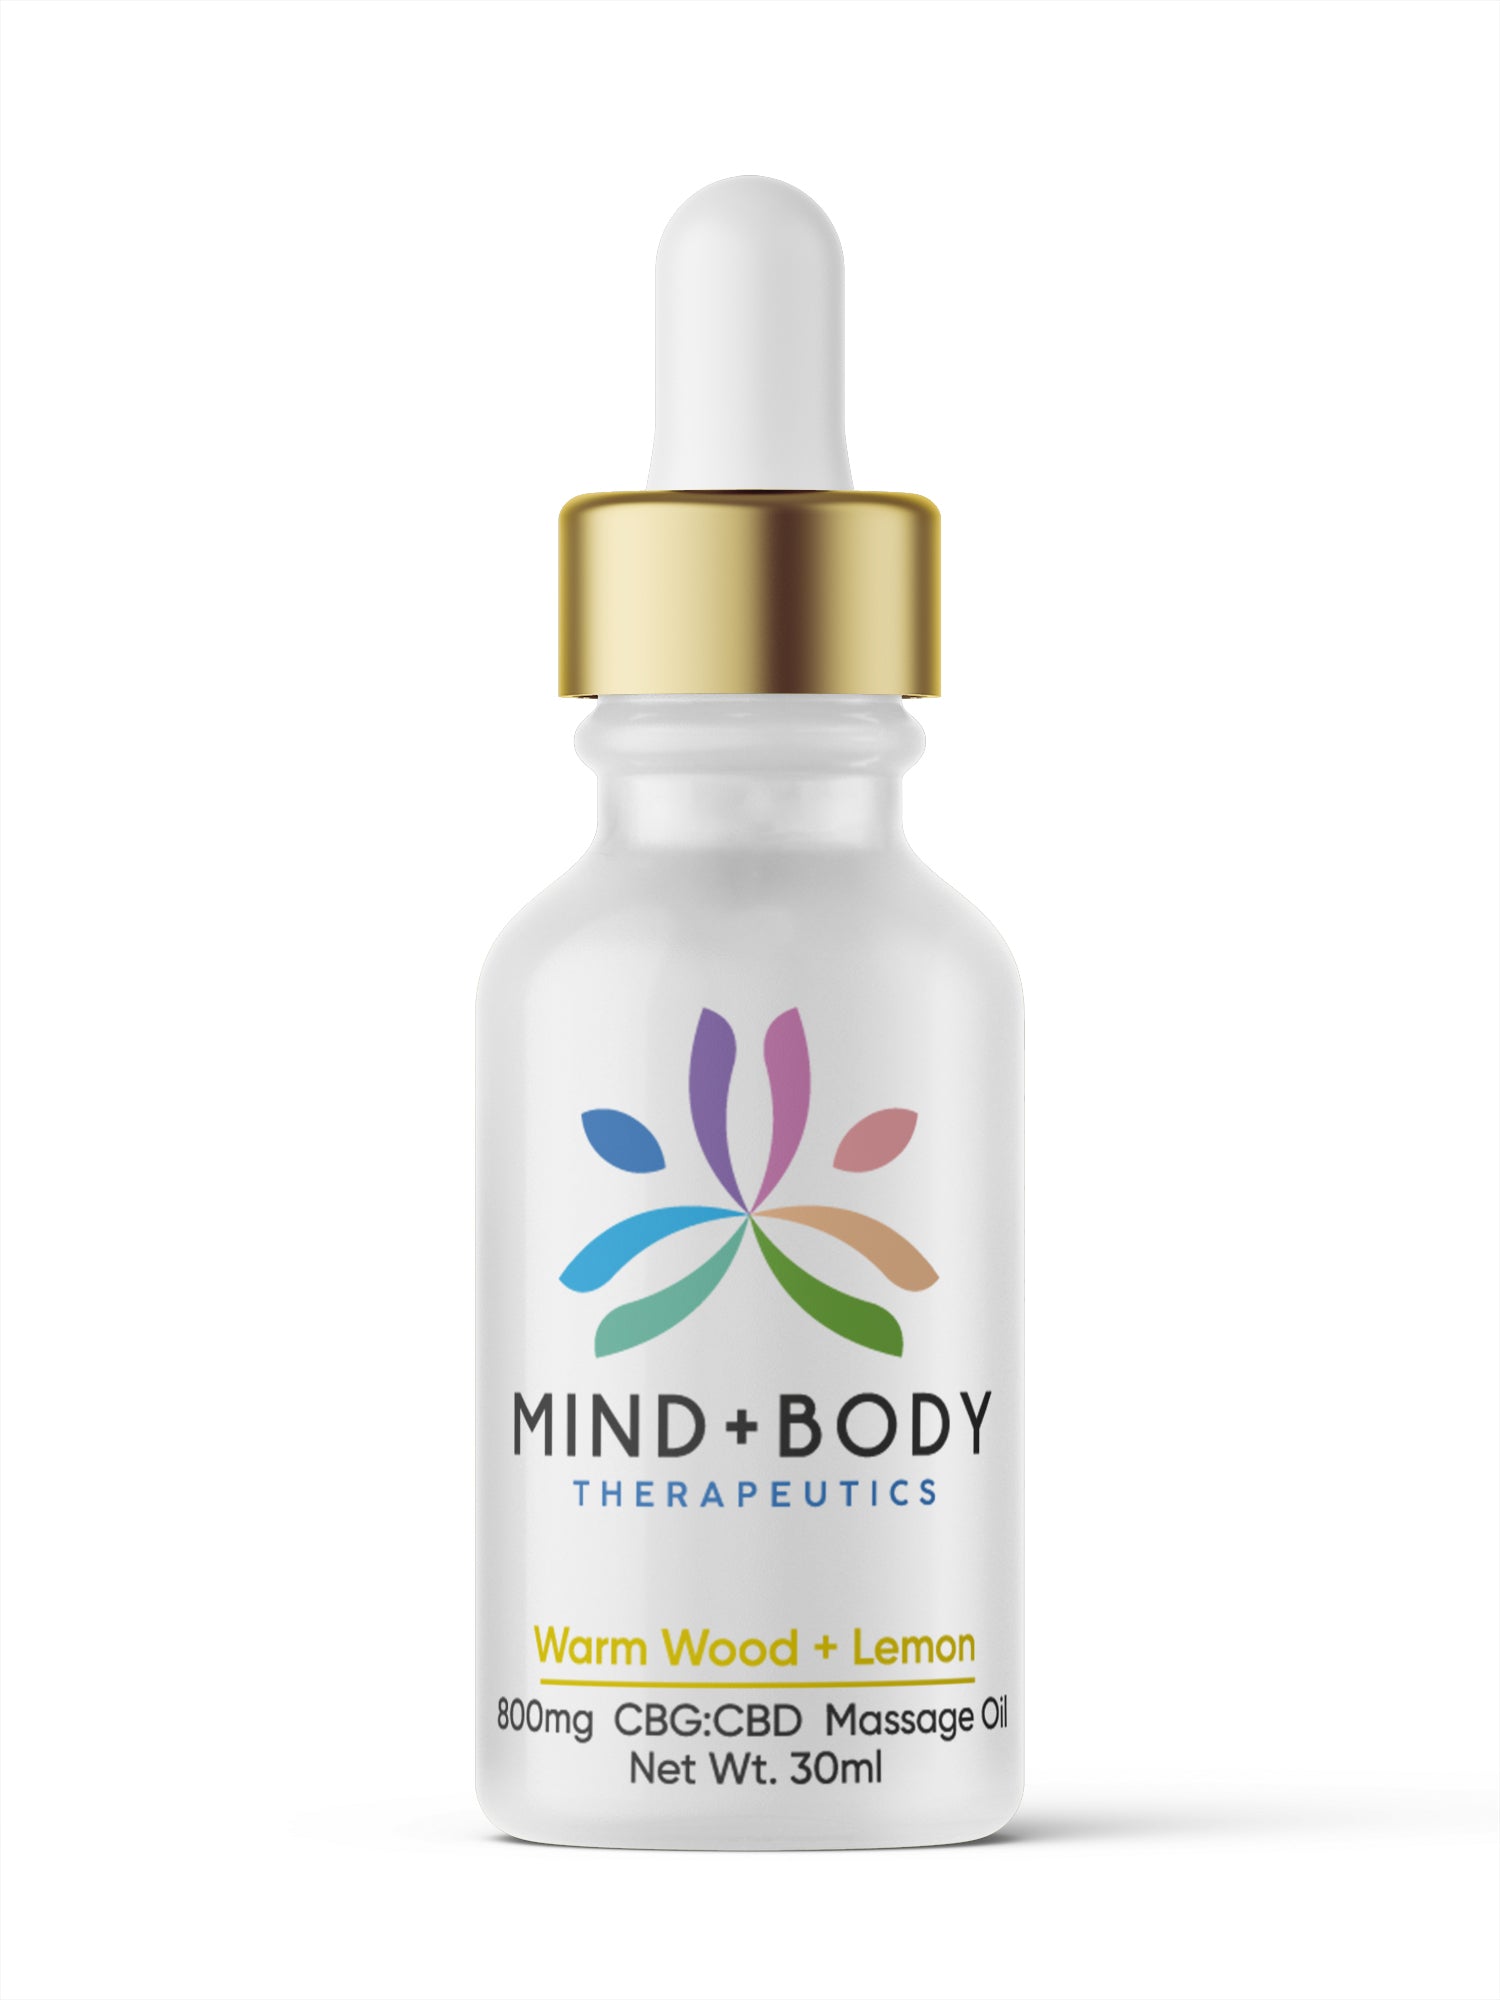 Mind+Body Therapeutics CBG:CBD 800mg Massage Oil 30ml - Warm Wood + Lemon (12ct) - Unit